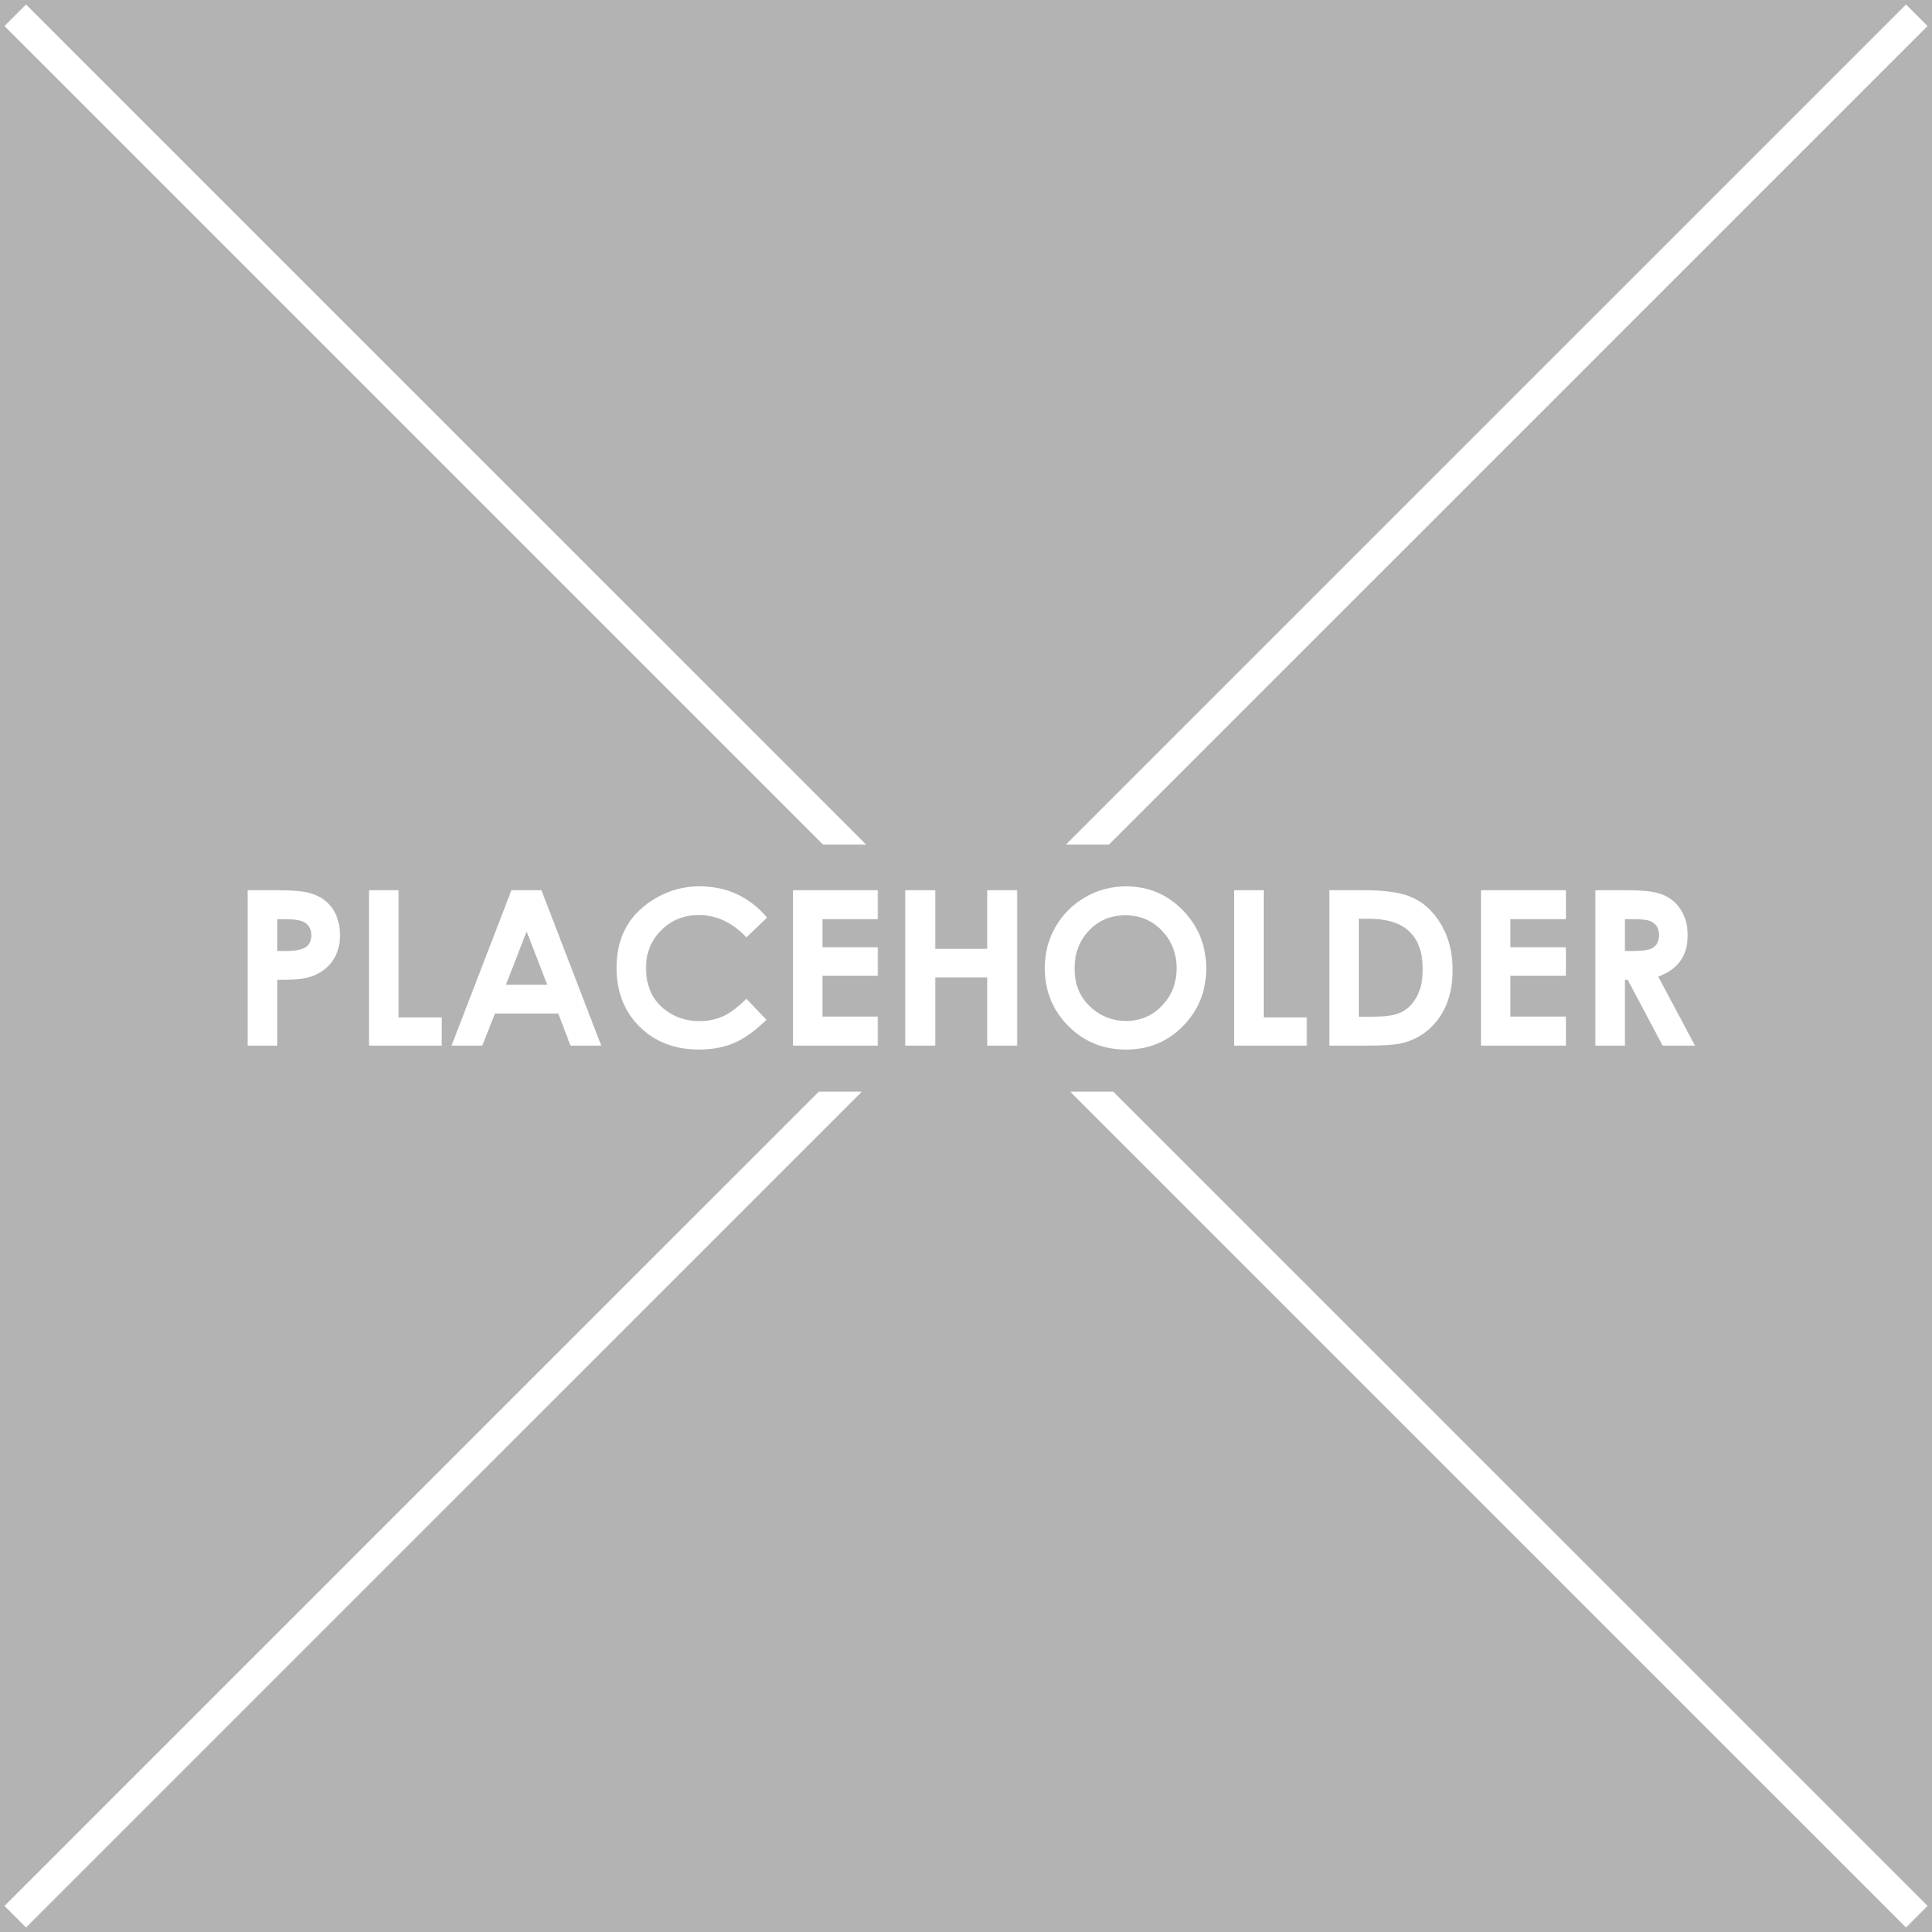 Placeholder copy 4.png